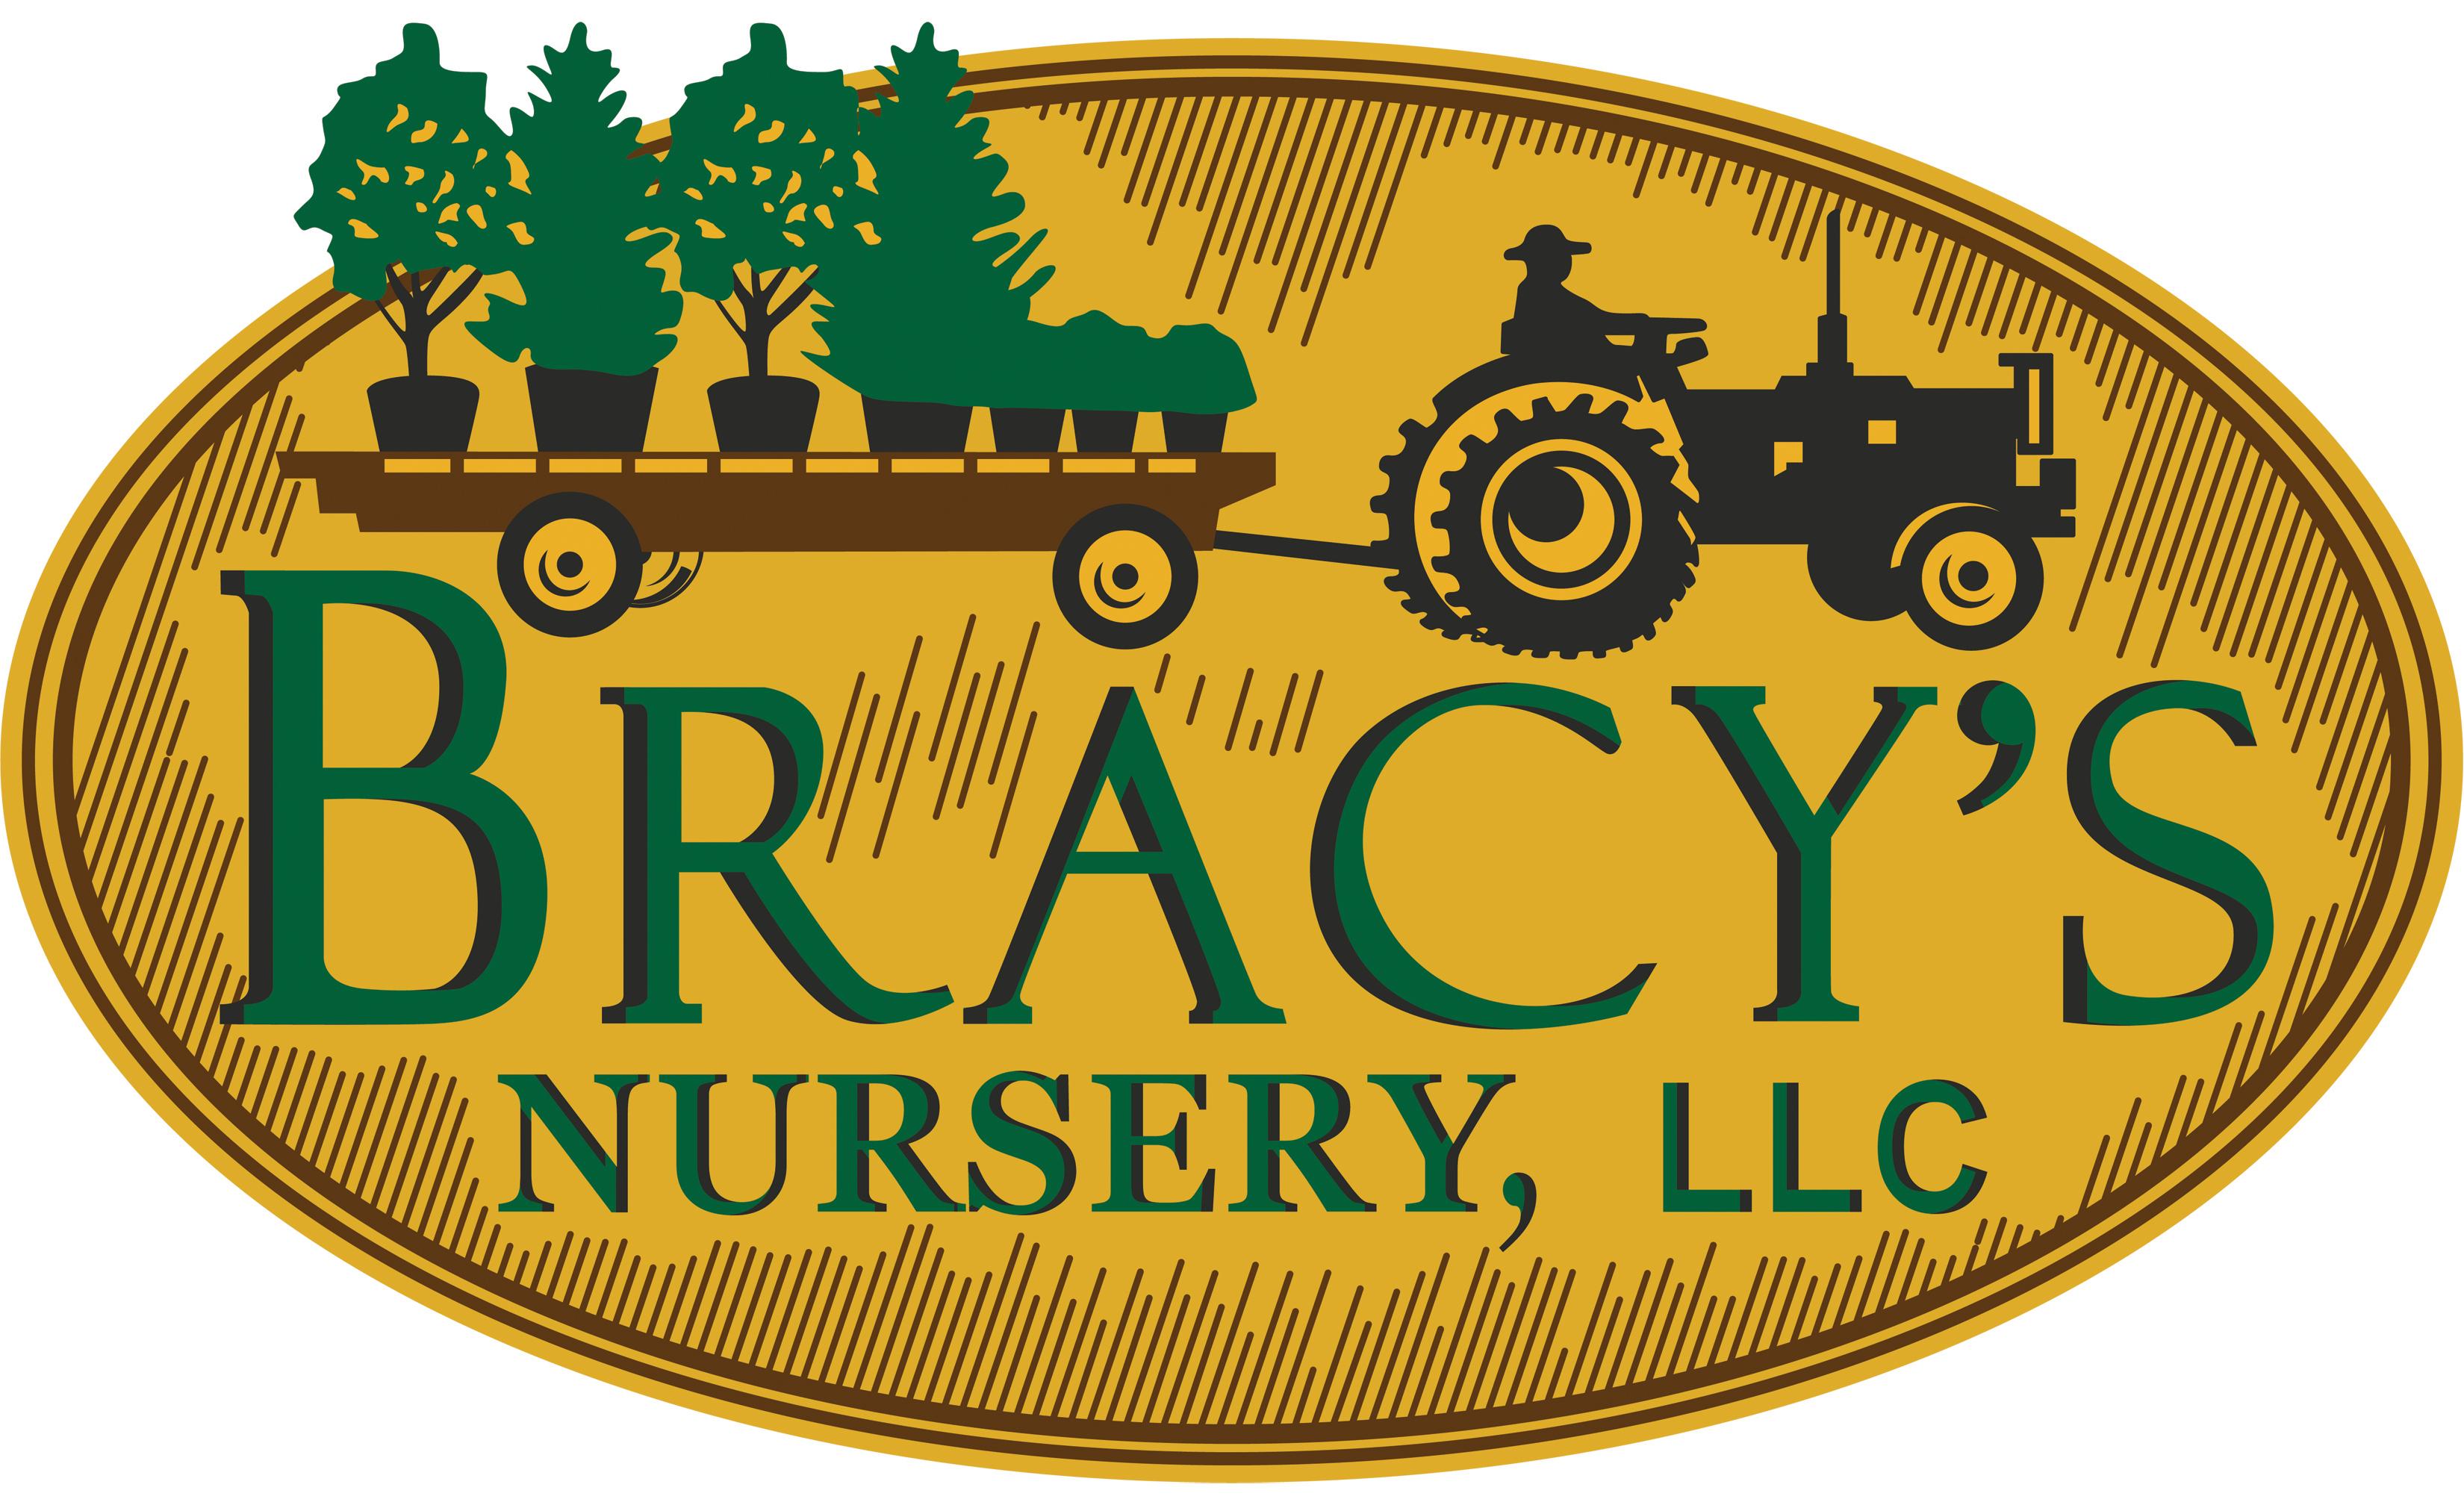 Bracy's Nursery, LLC